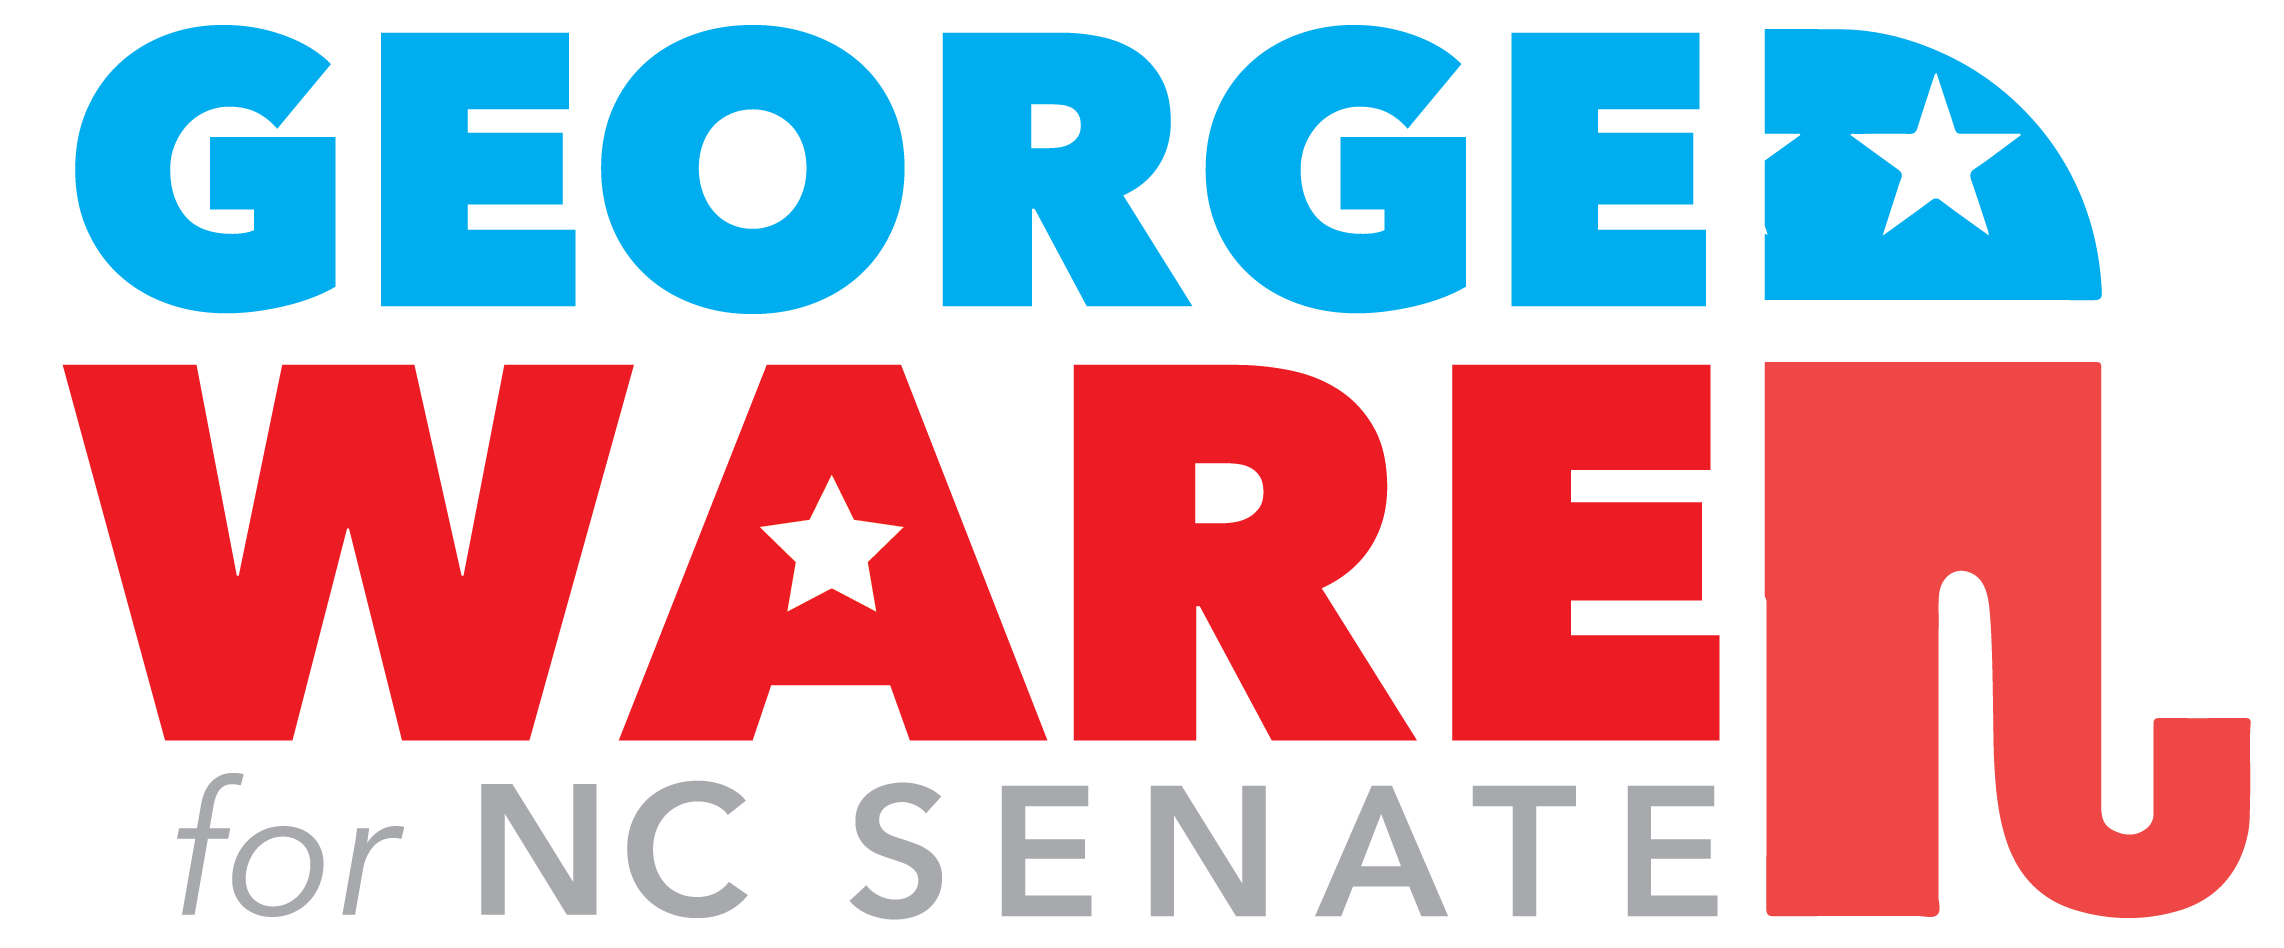 George Ware for NC Senate